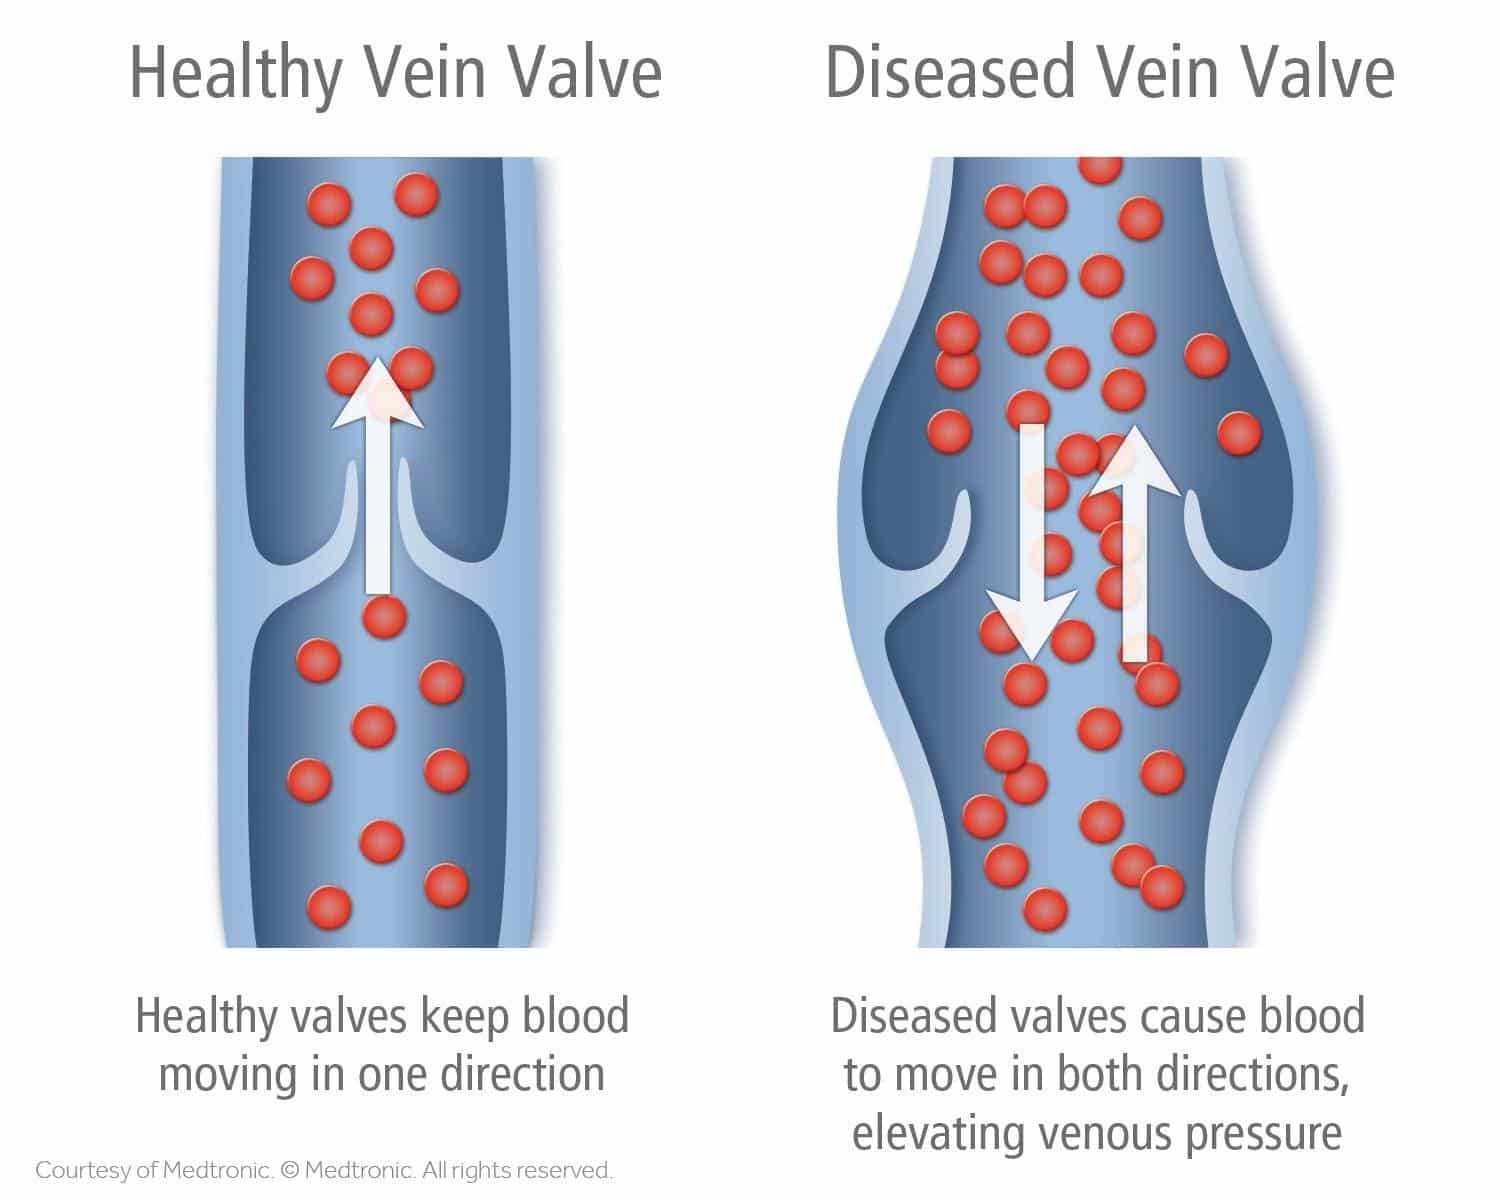 Difference Between Healthy Vein Valve and Diseased Vein Valve